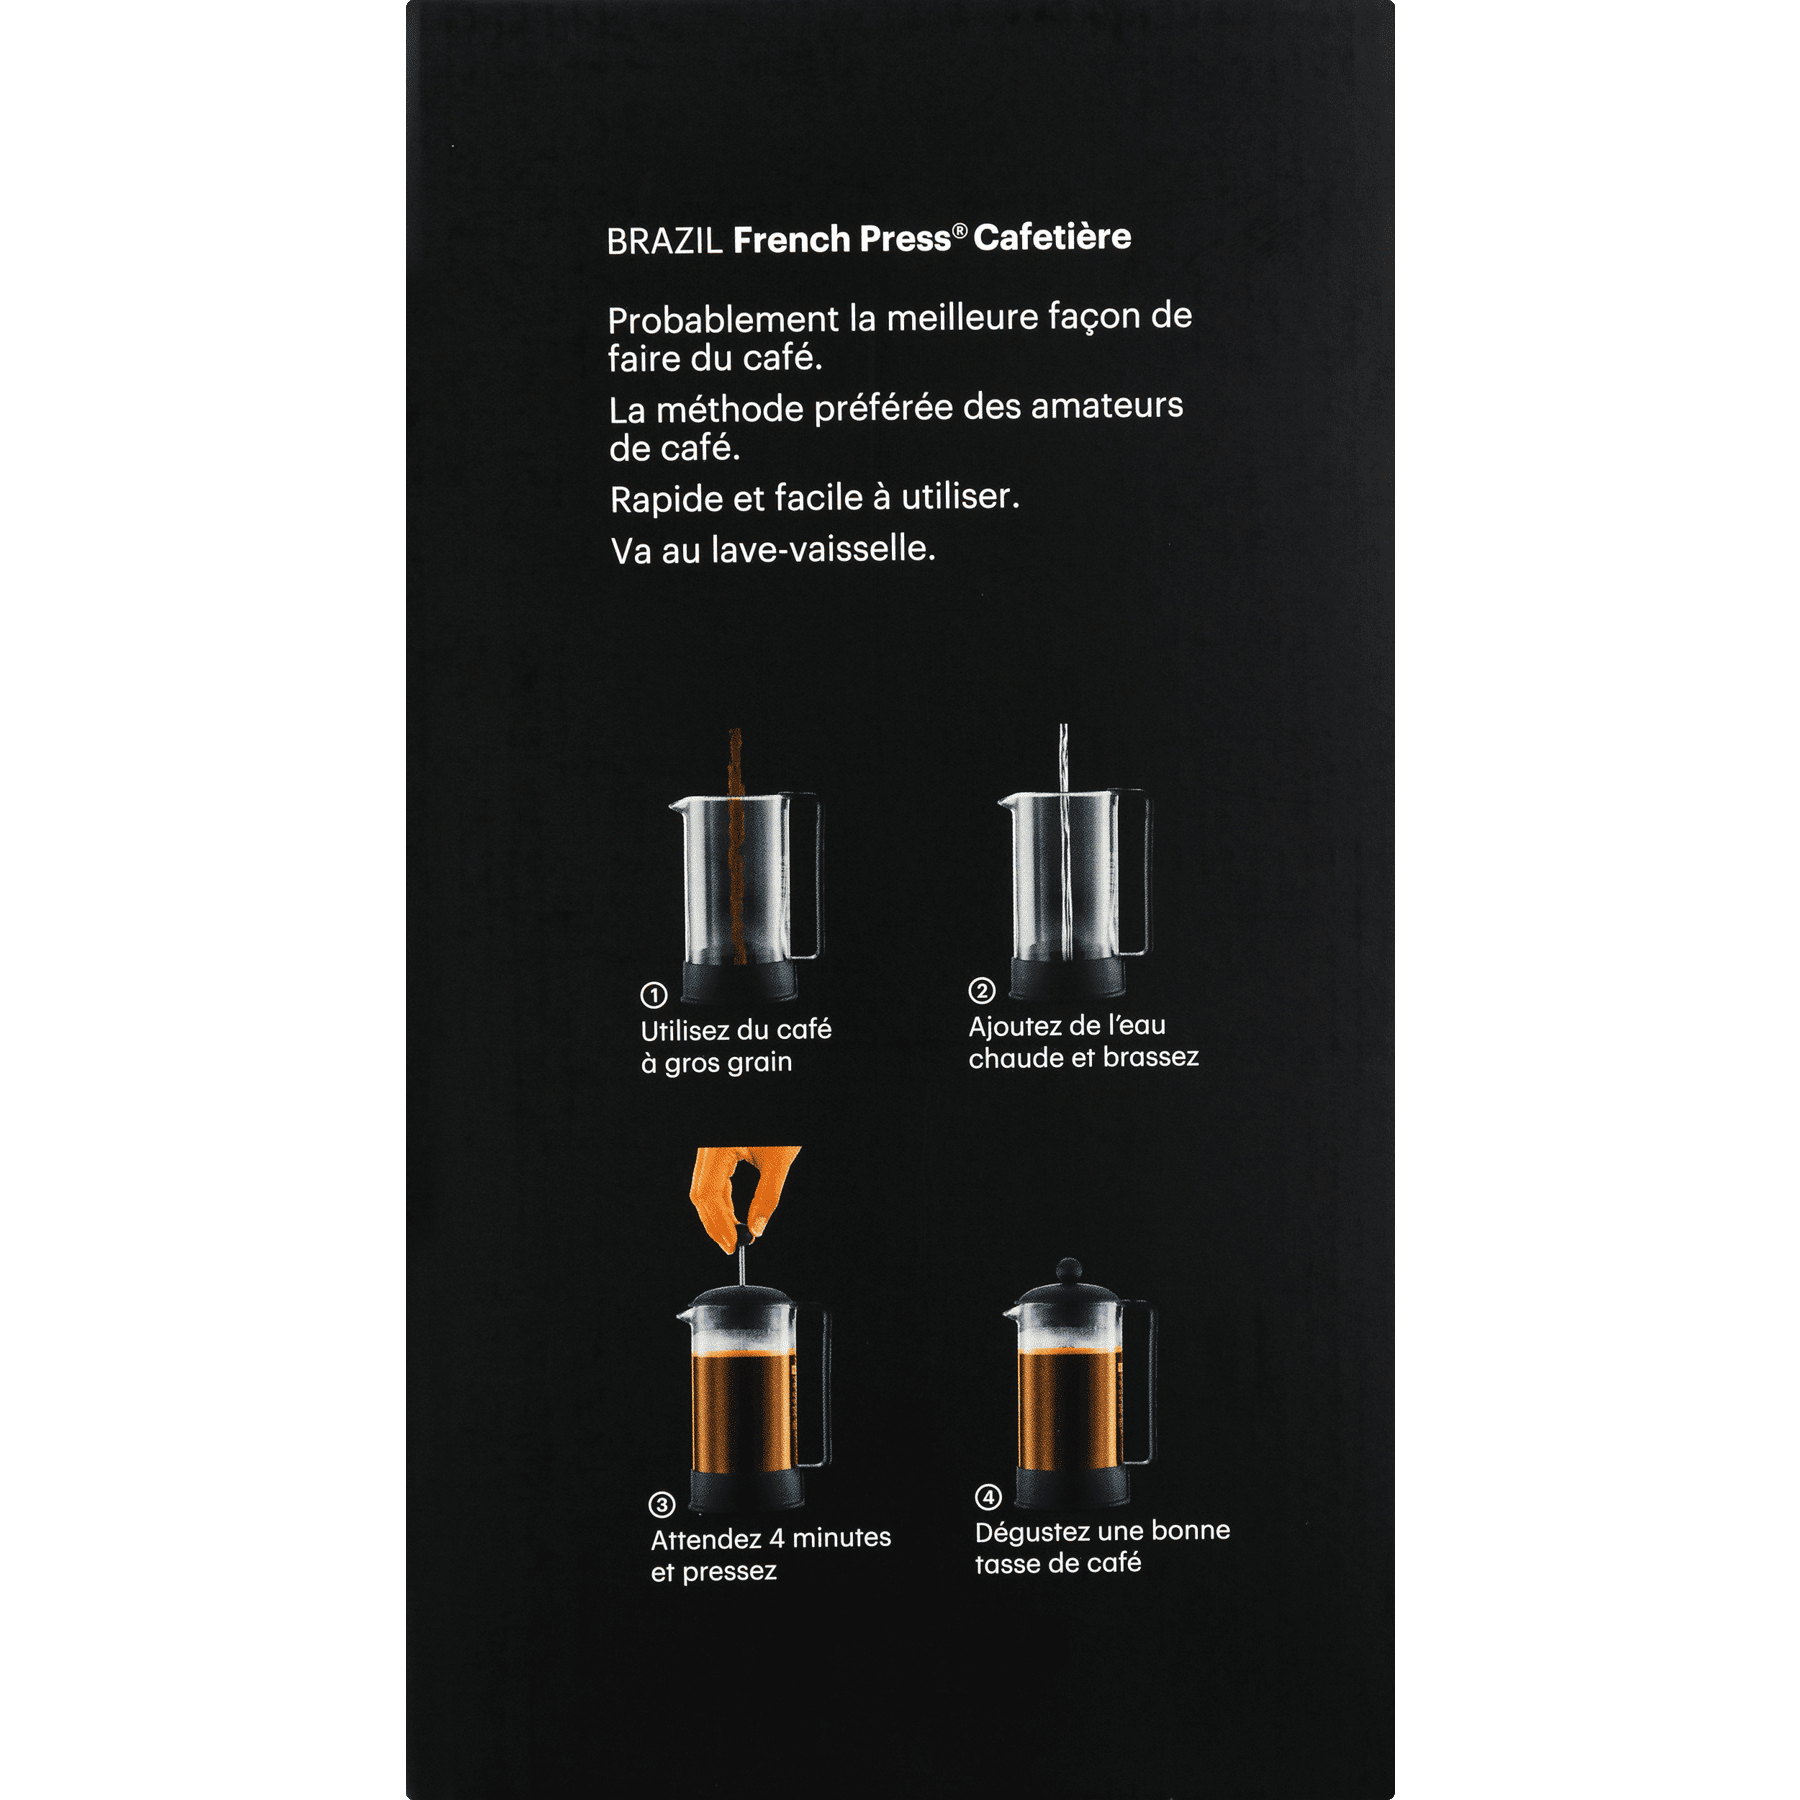 Bodum French Press B&B Cognac 1 Cup Serving Glass Mini Travel Coffee Maker